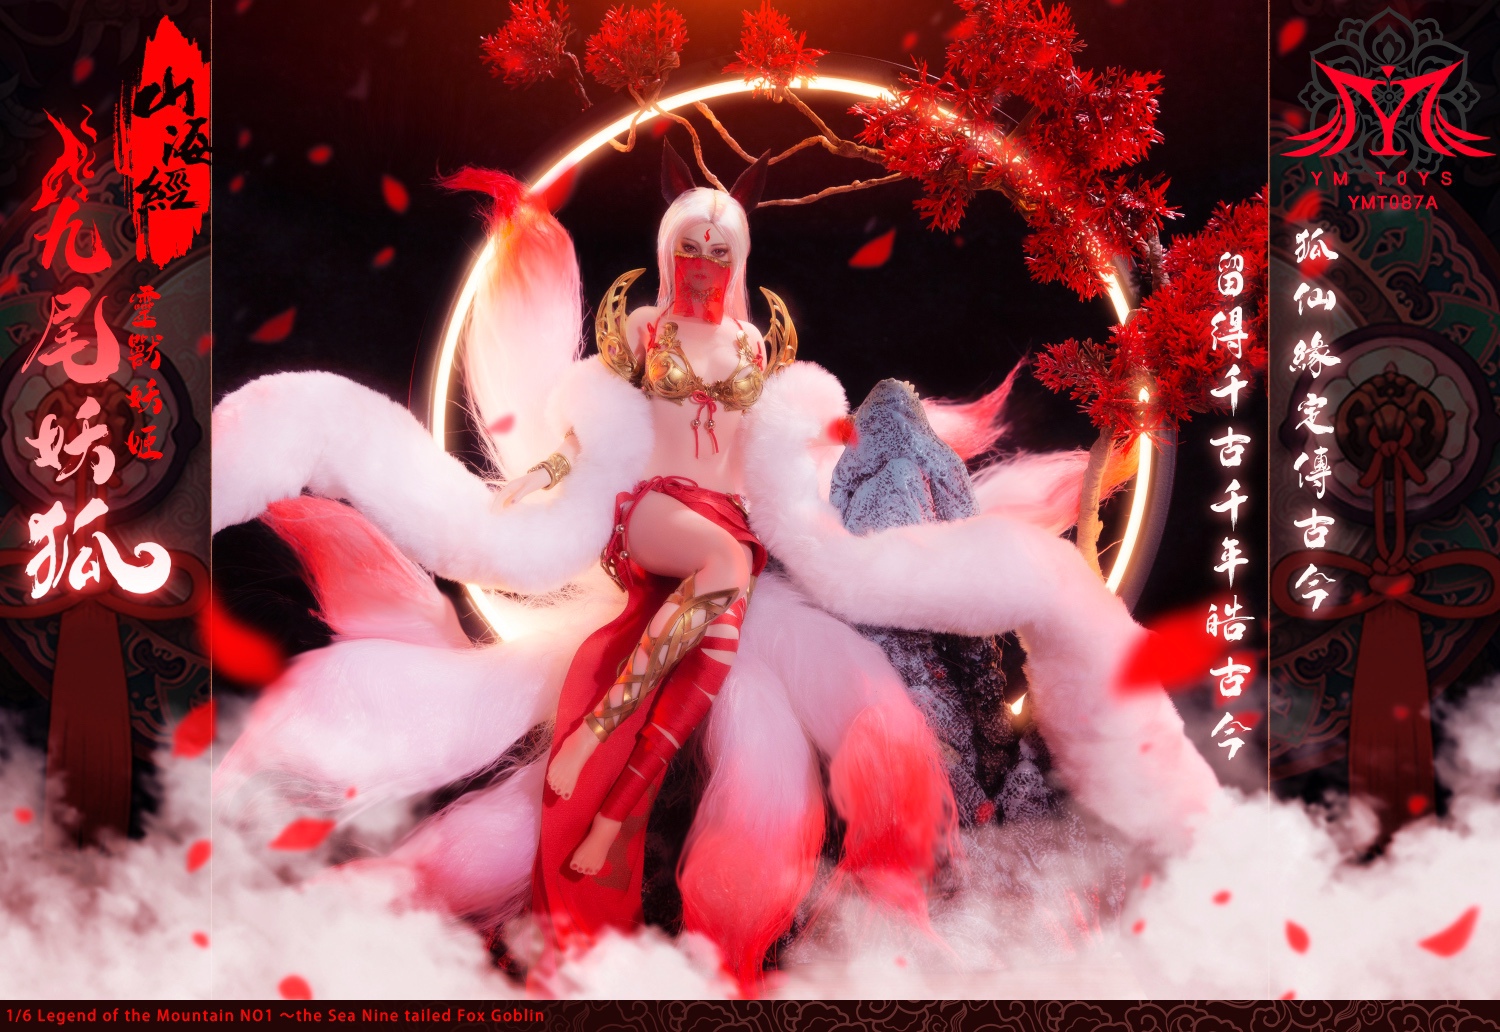 NEW PRODUCT: YMTOYS - Shanhaijing series first bullet - spirit beast demon concubine nine-tailed demon fox 05106